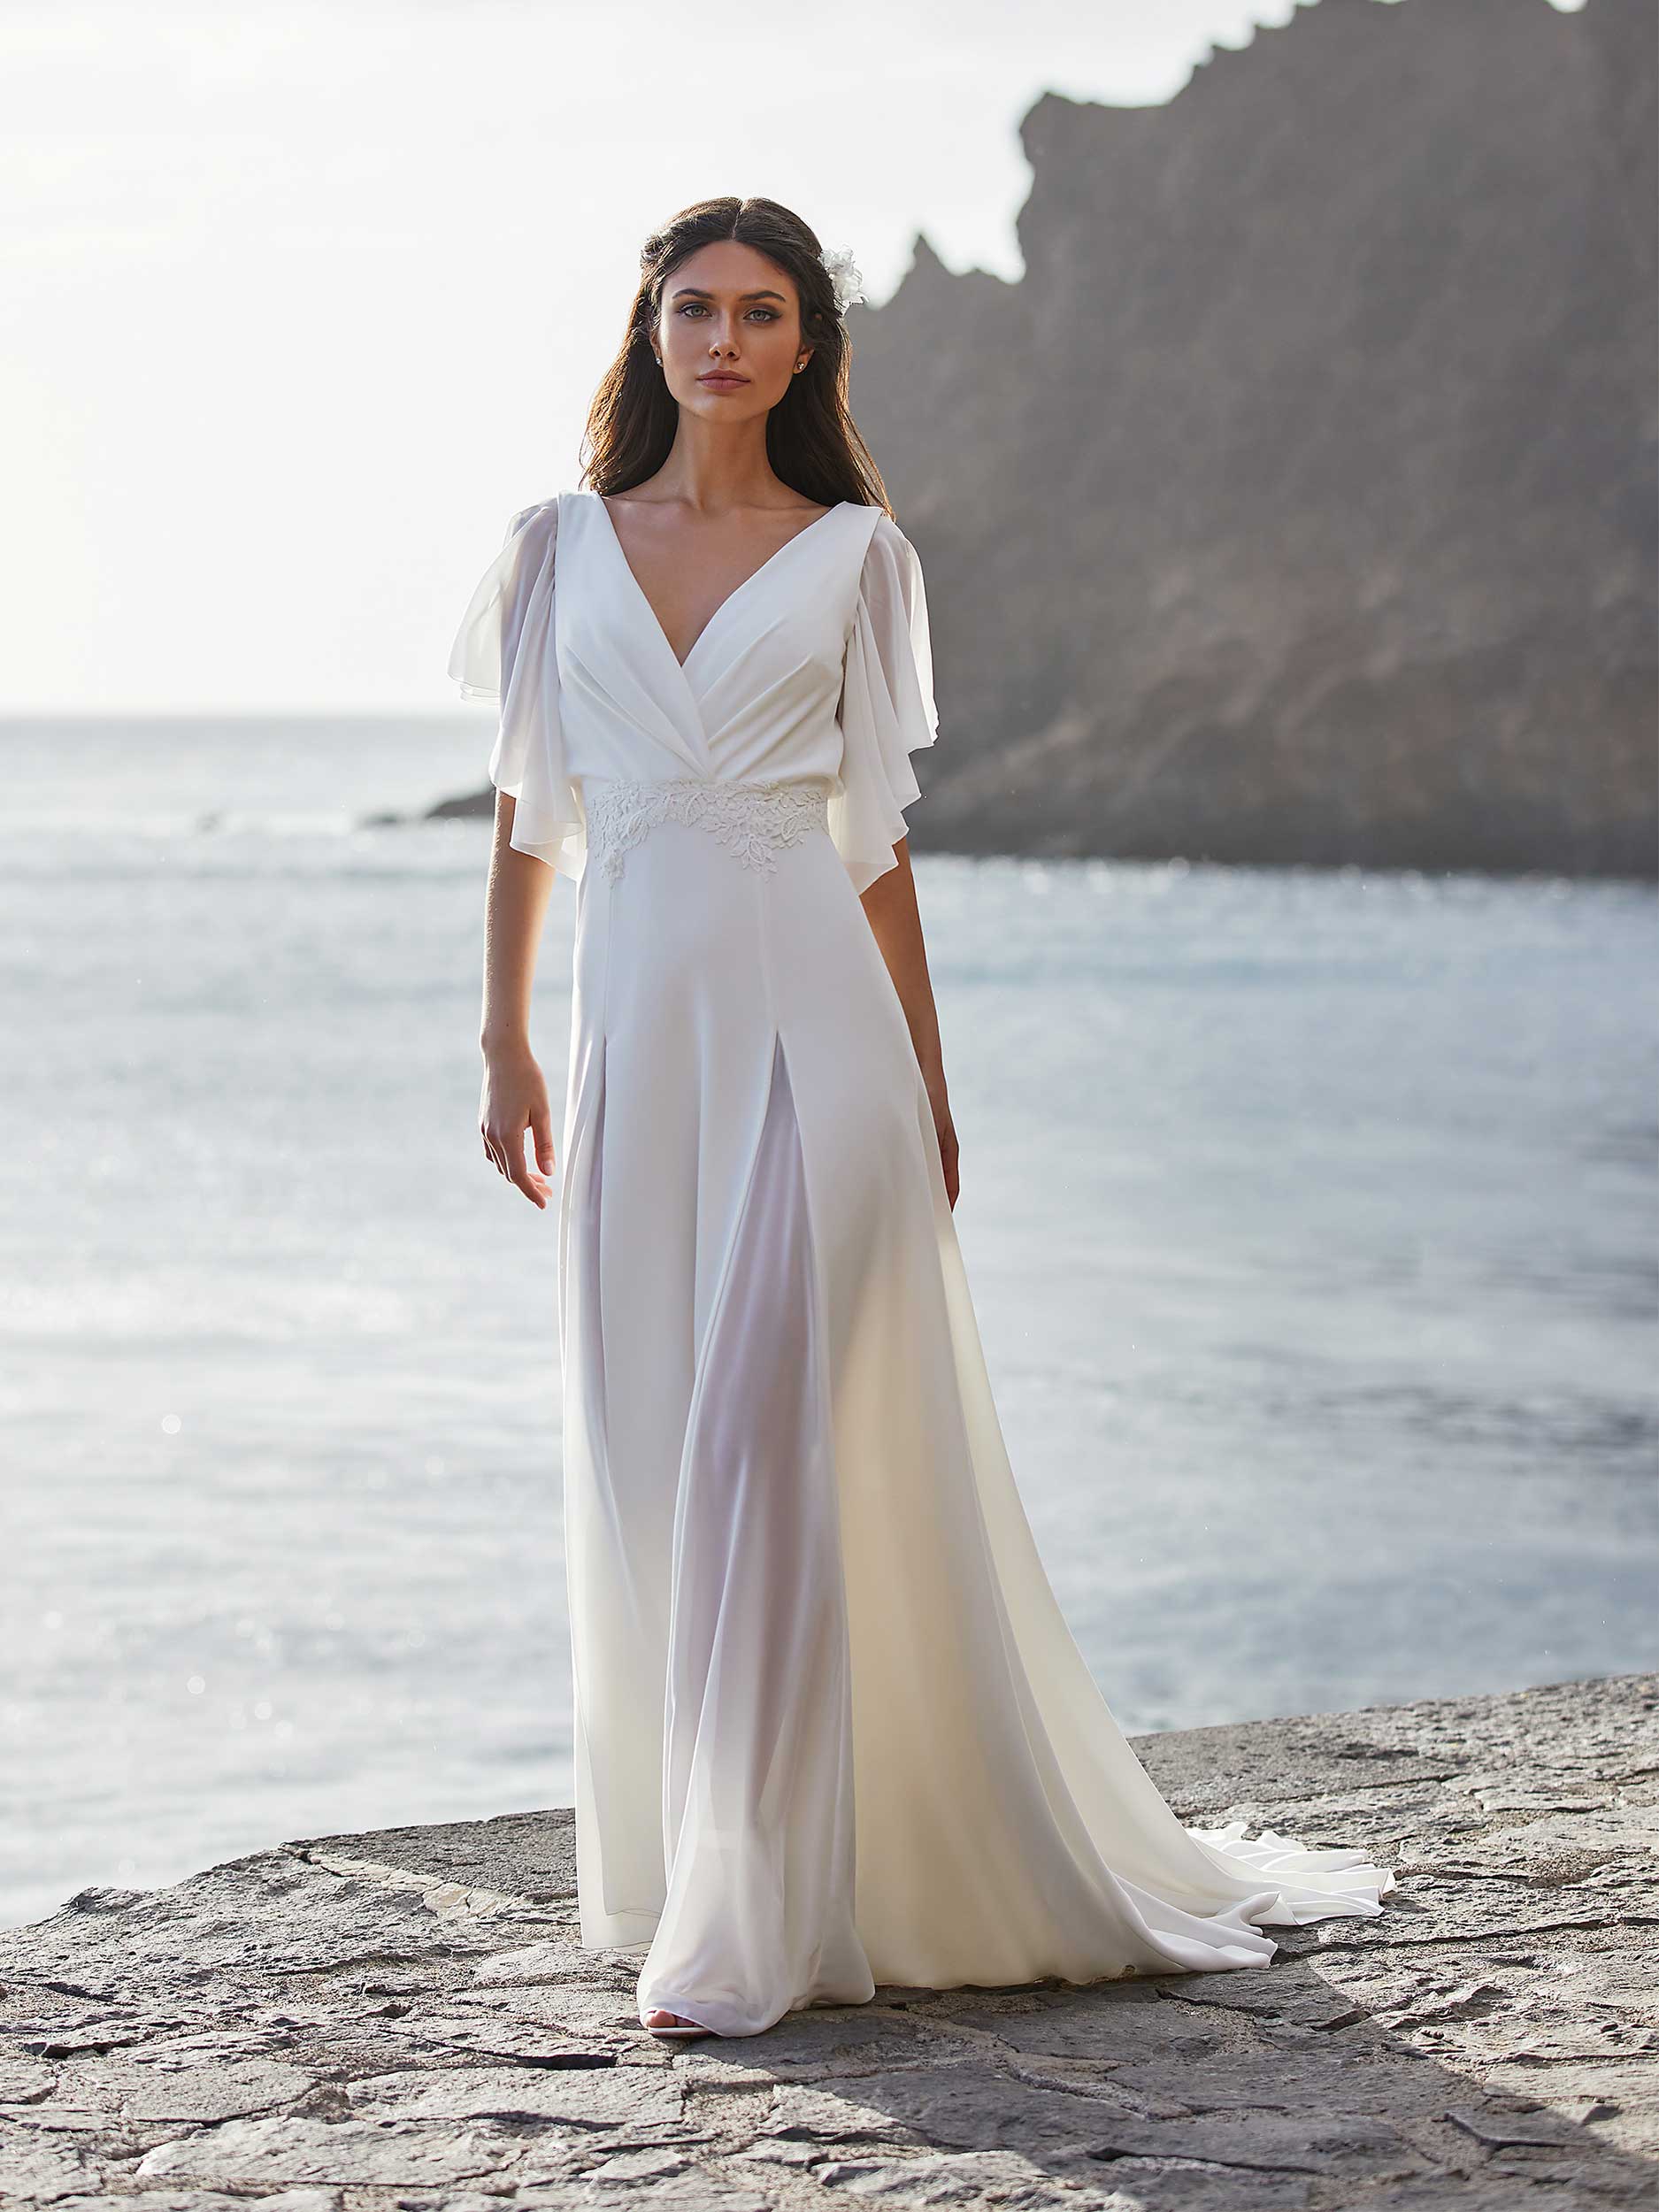 Cómo vestir en tu boda en la playa? | Pronovias